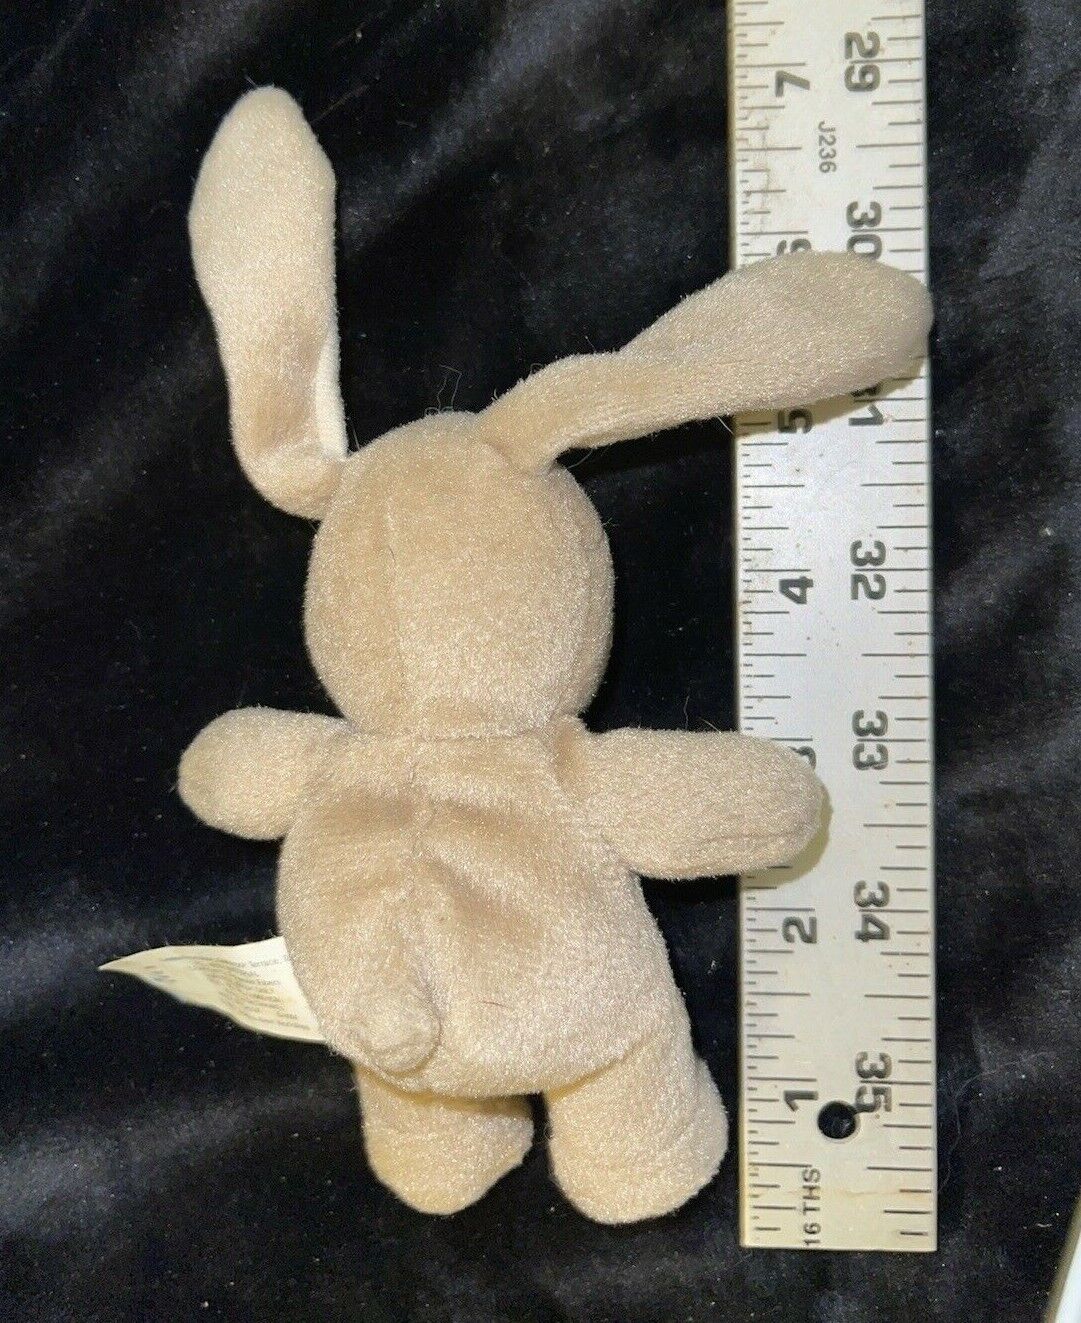 Lot of 3 Build-A-Bear Floppy Ear Tan Easter Bunny Rabbits Plush Stuffed Animals Build-A-Bear Workshop - фотография #9